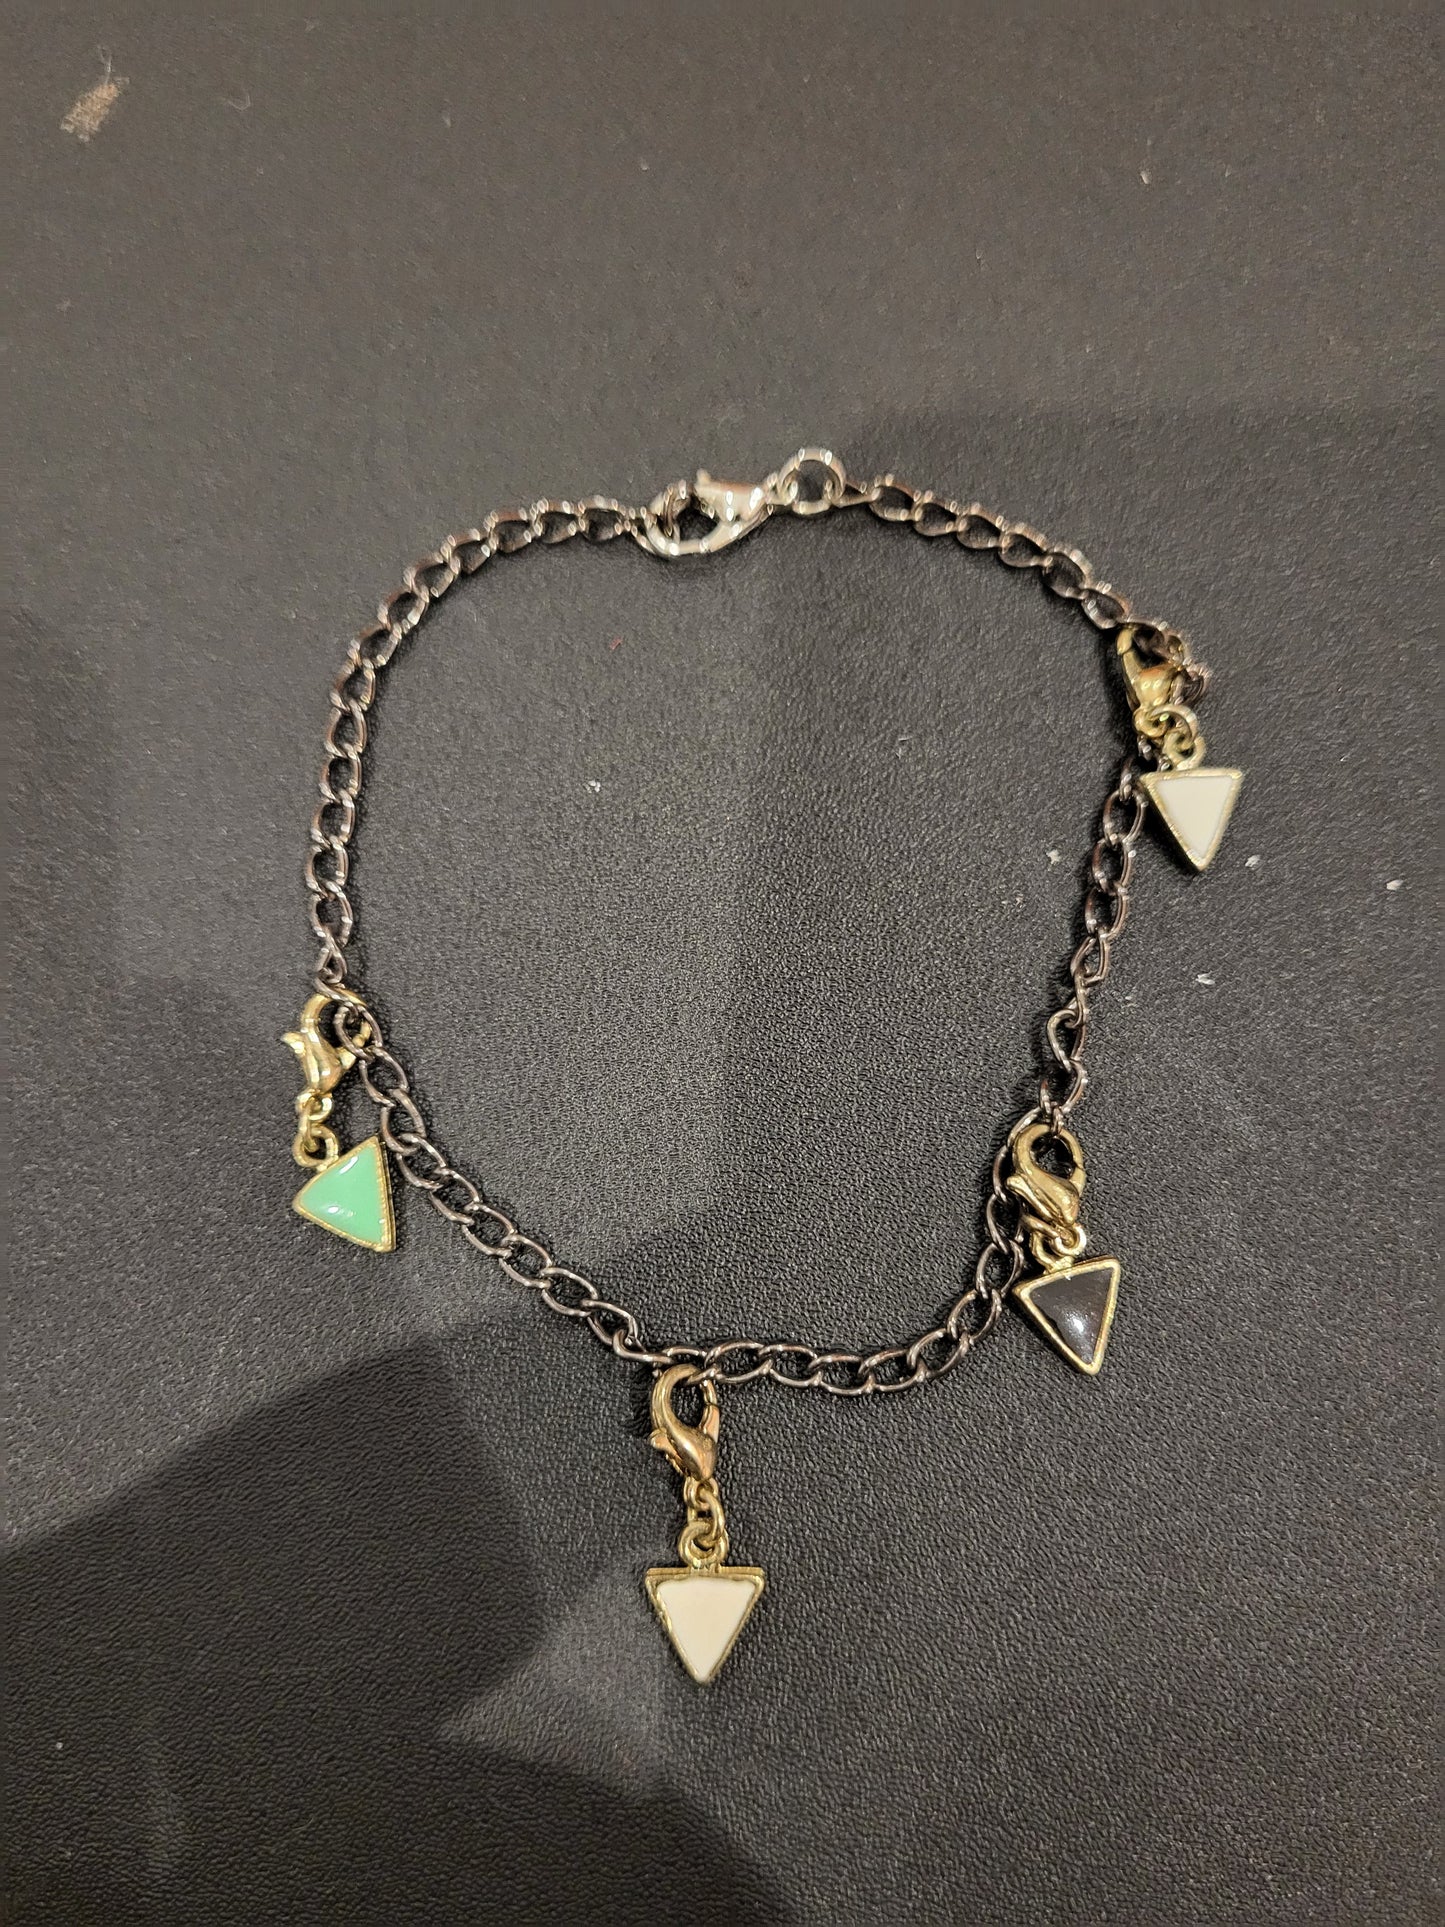 Handmade multi colored triangle charm bracelet